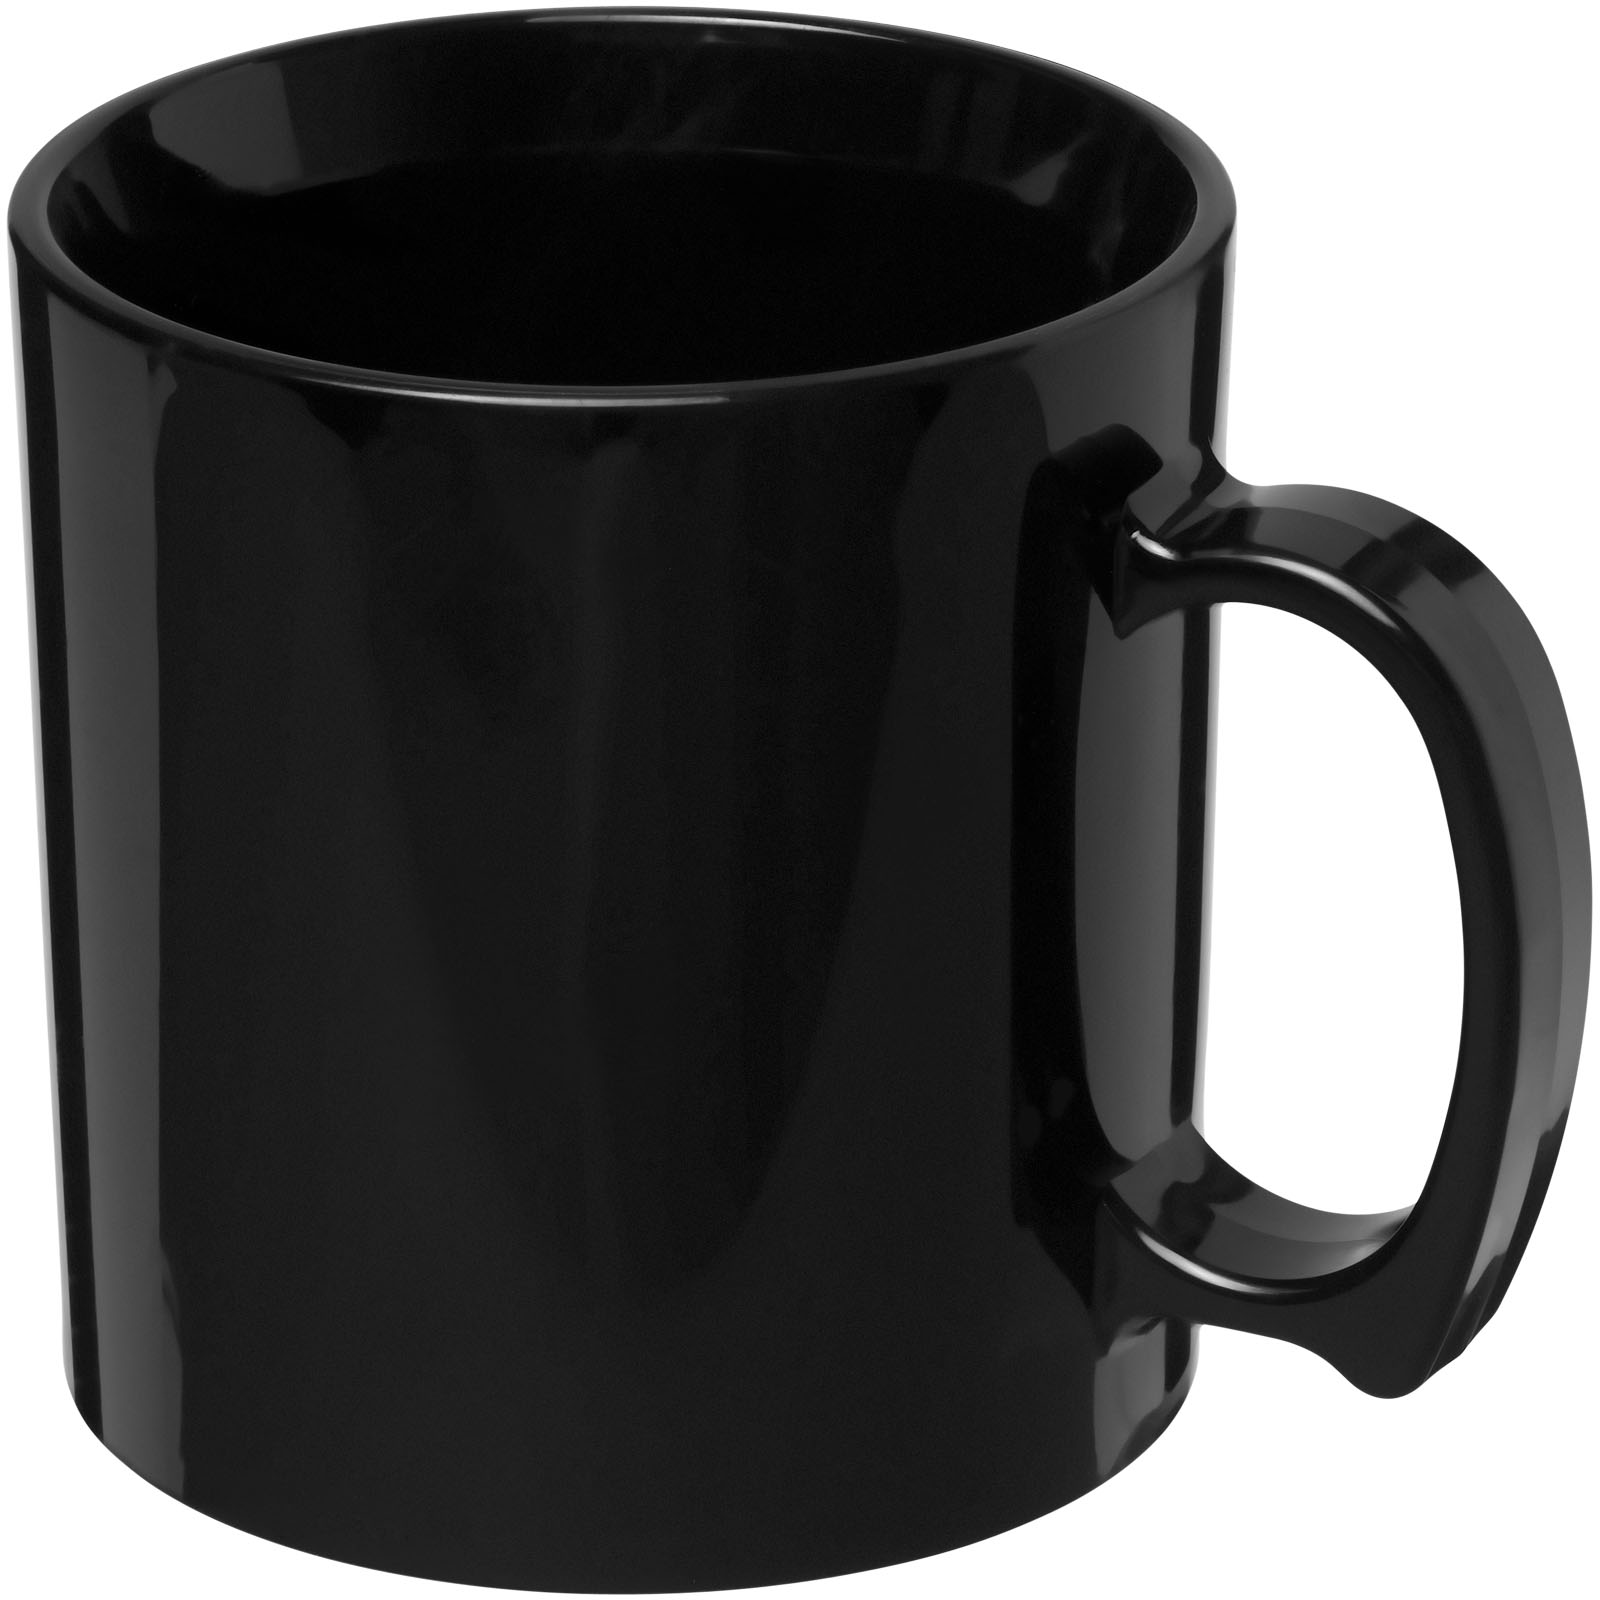 Drinkware - Standard 300 ml plastic mug